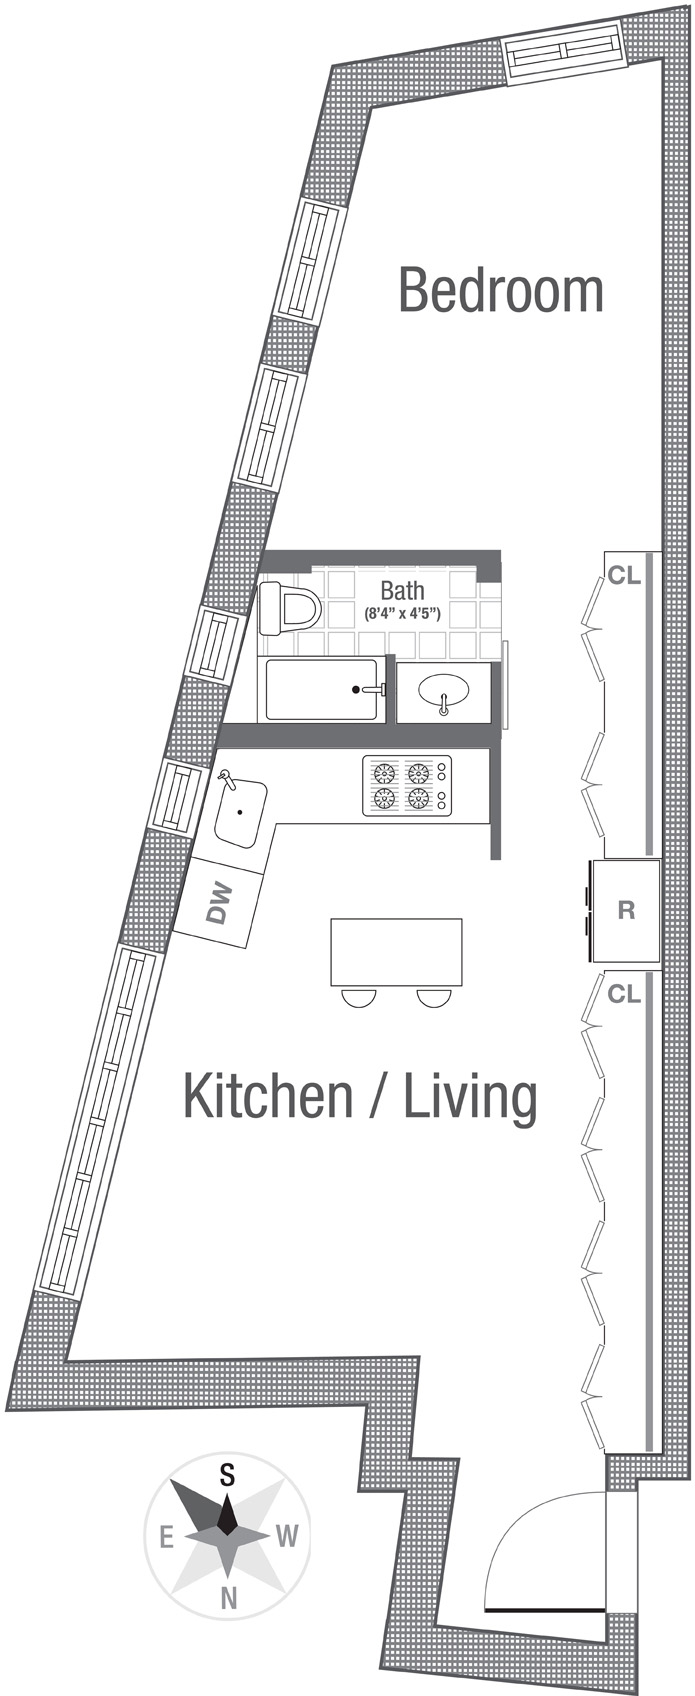 Floorplan for 210 Sixth Avenue